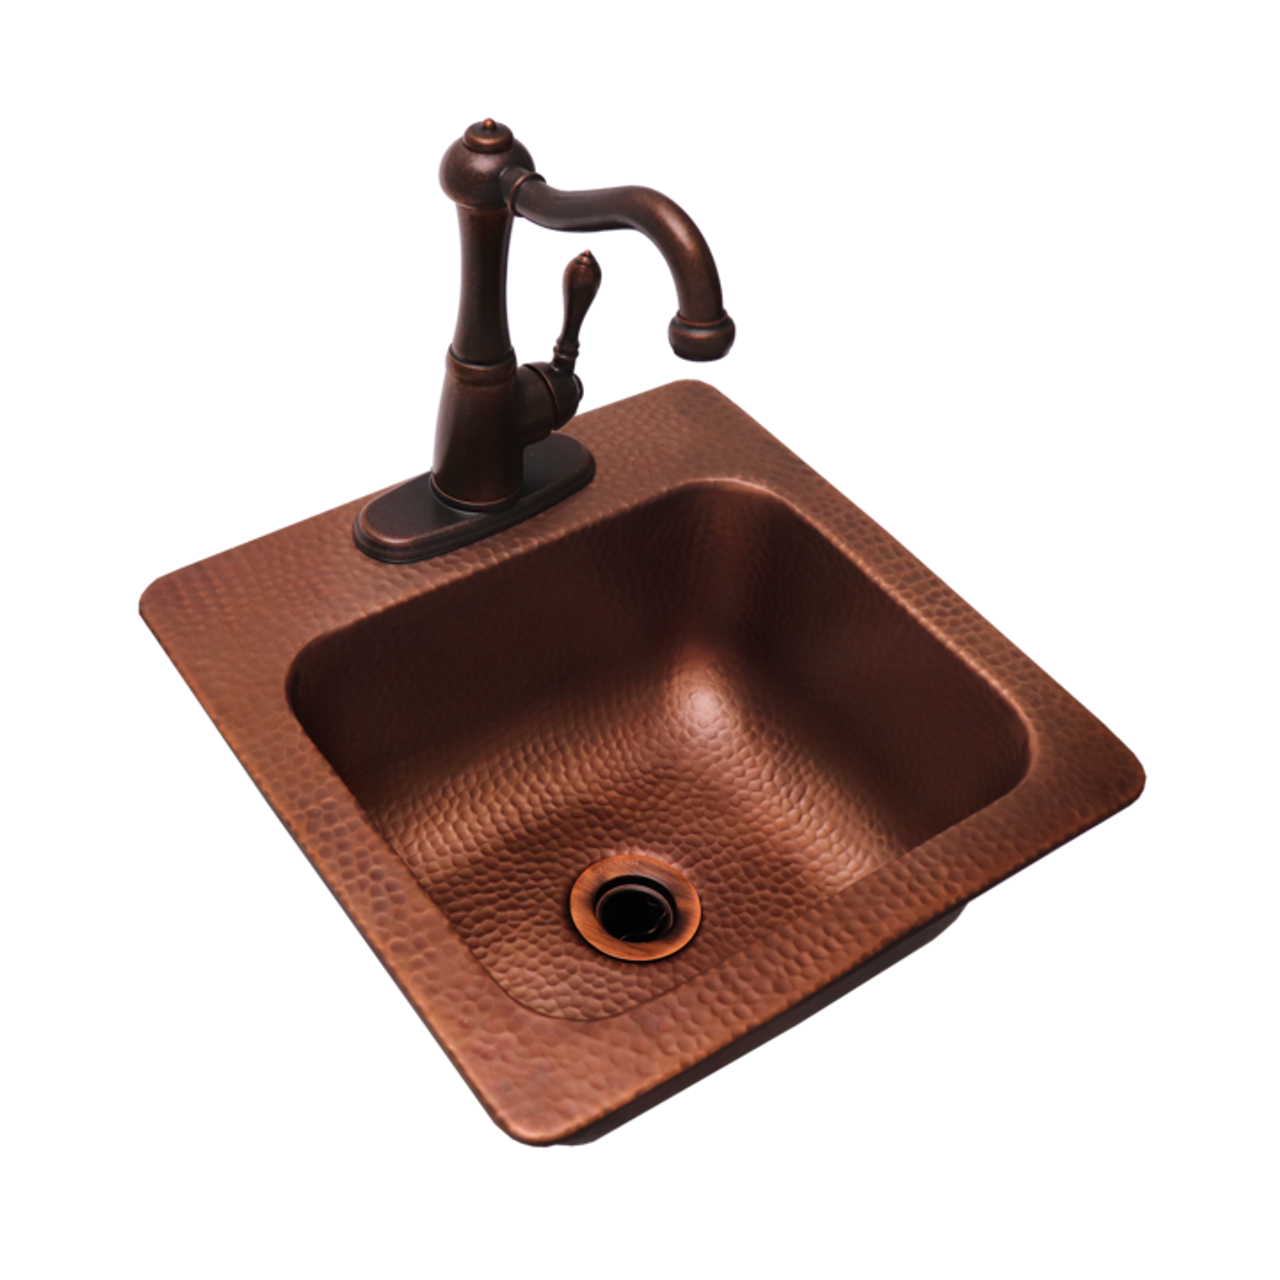 Rcs Copper Bar Sink Faucet 15 X 15 16 Gauge Copper Sink Hot Cold Water